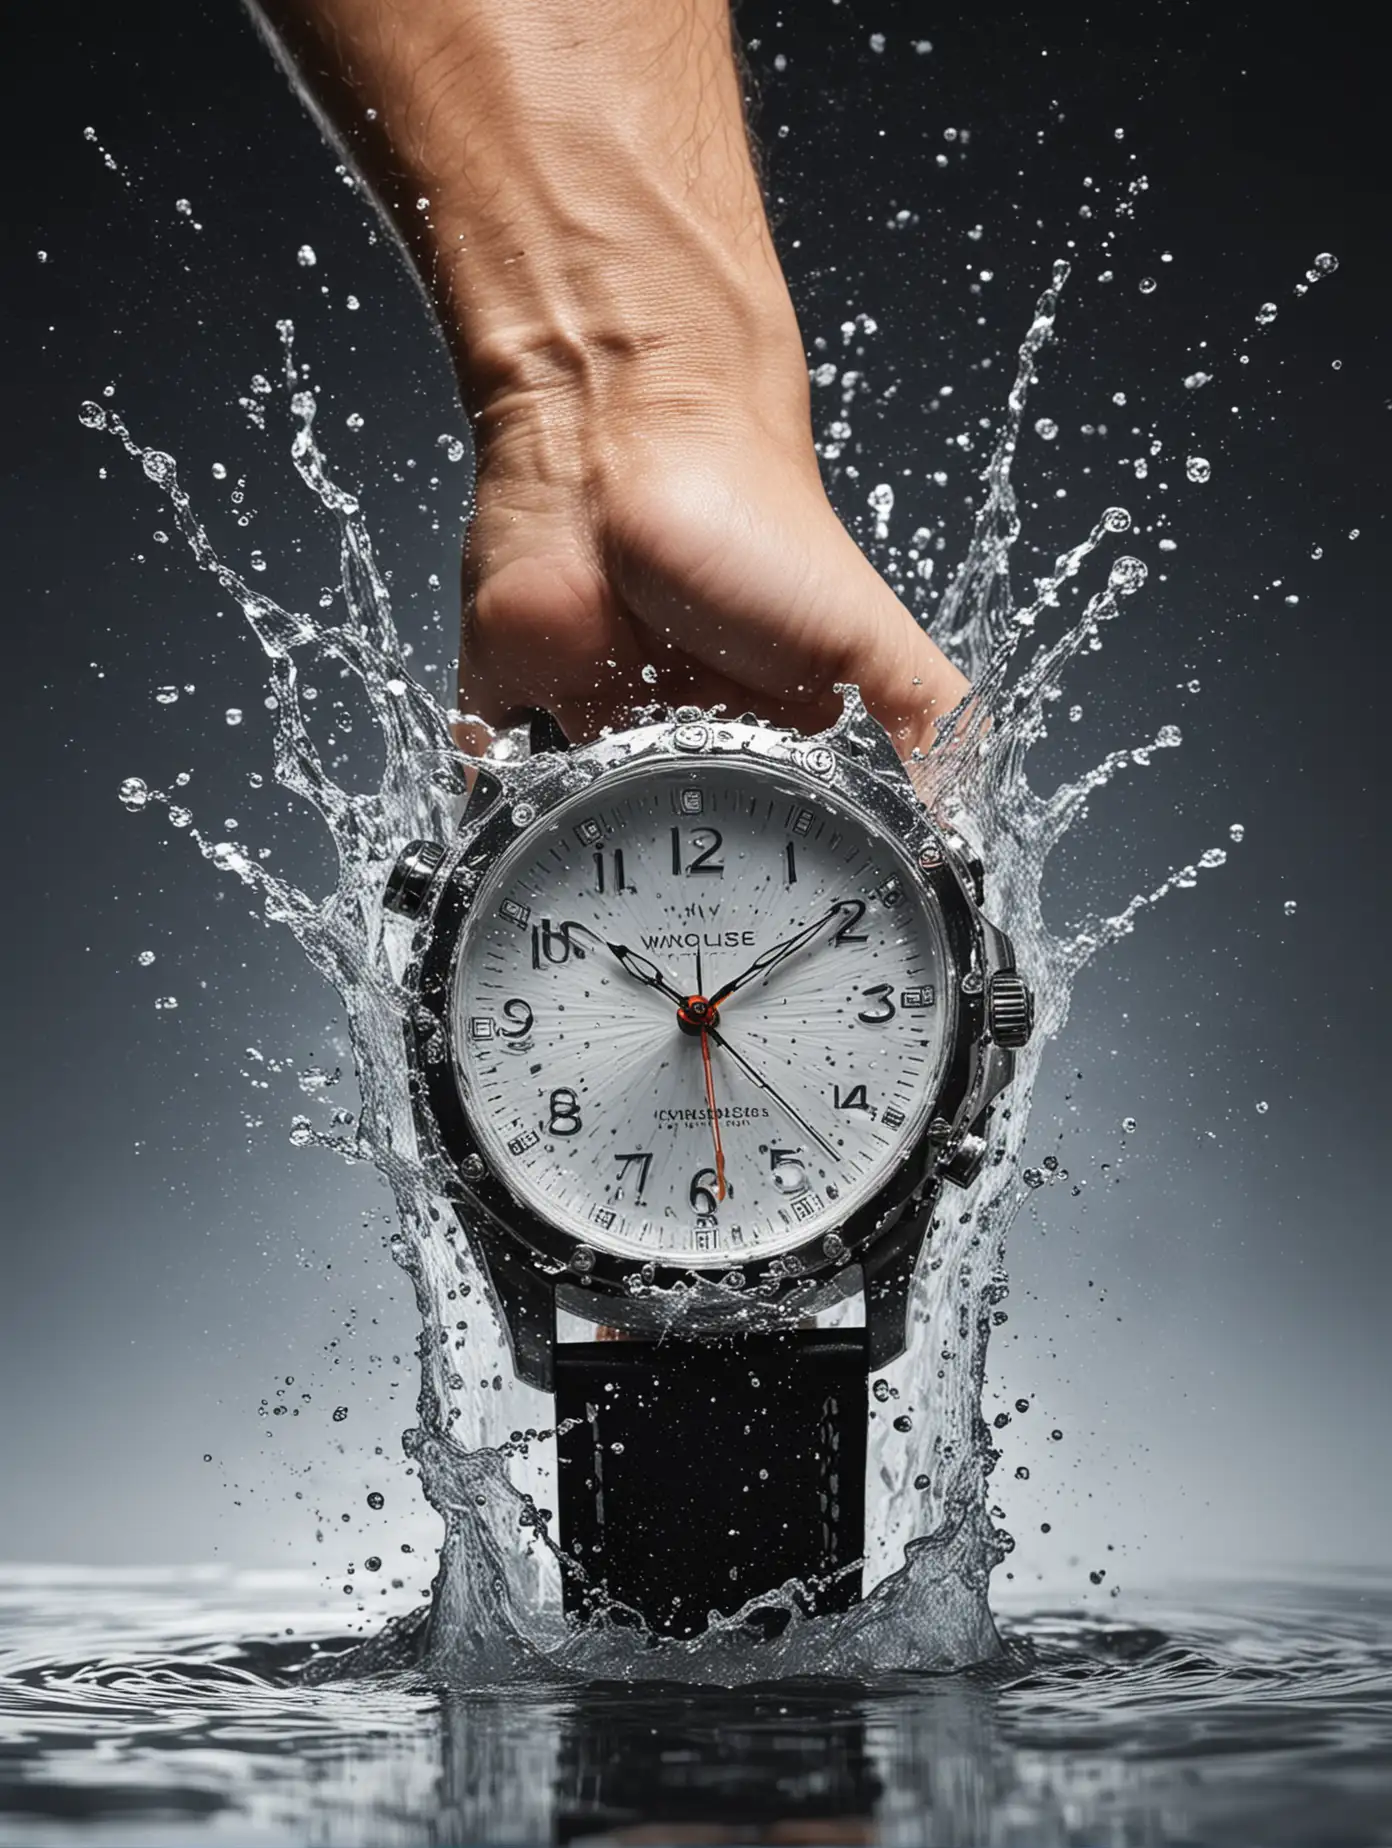 water splashing from behind a wrist watch